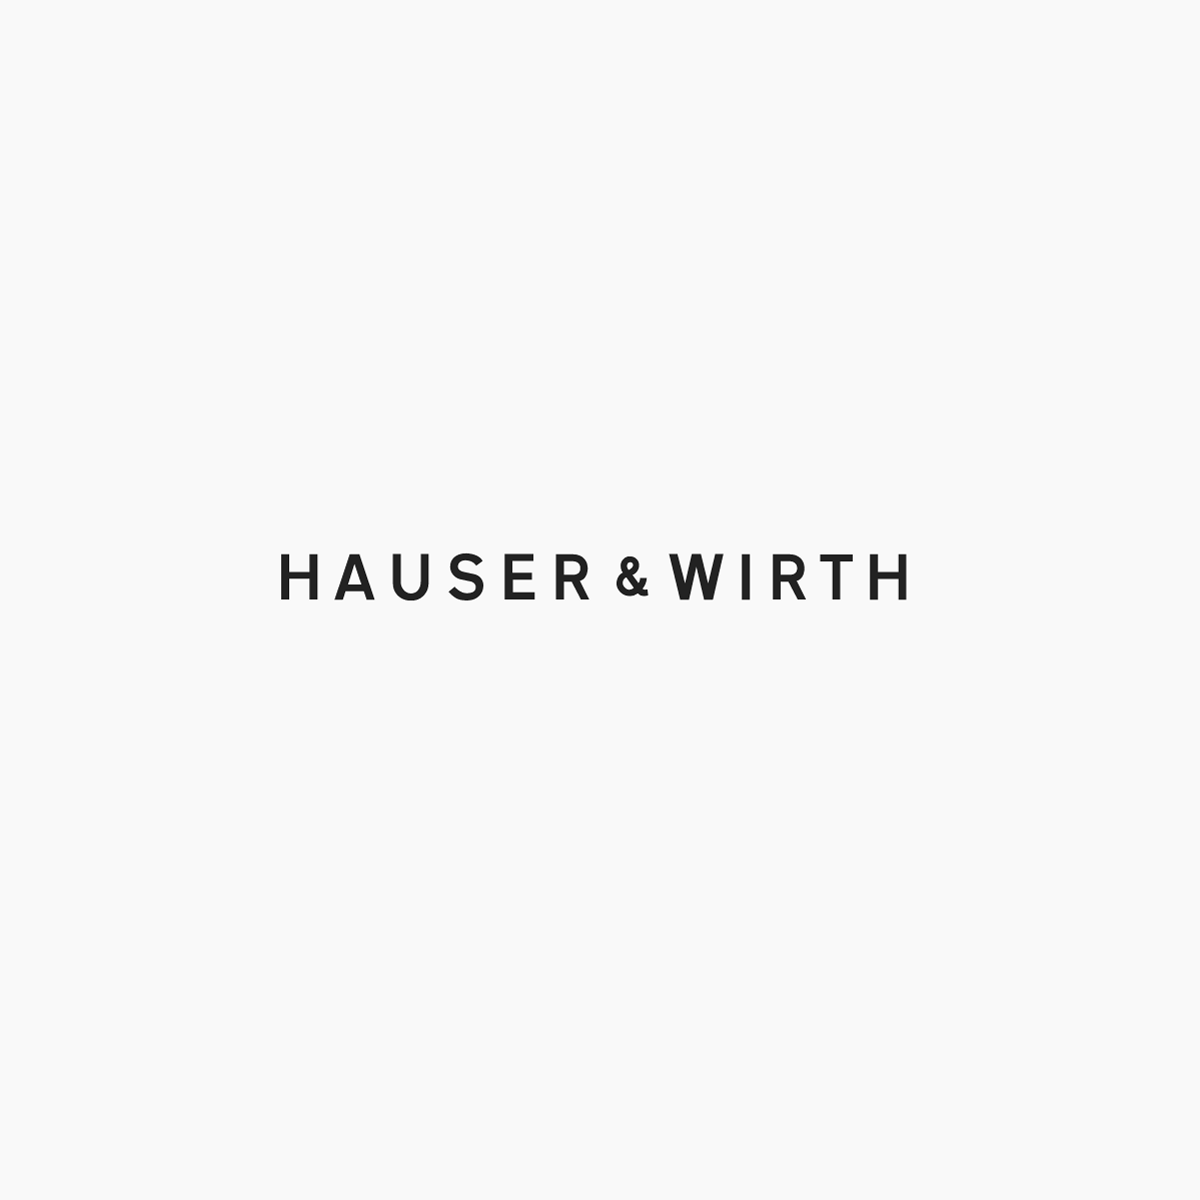 (c) Hauserwirth.com